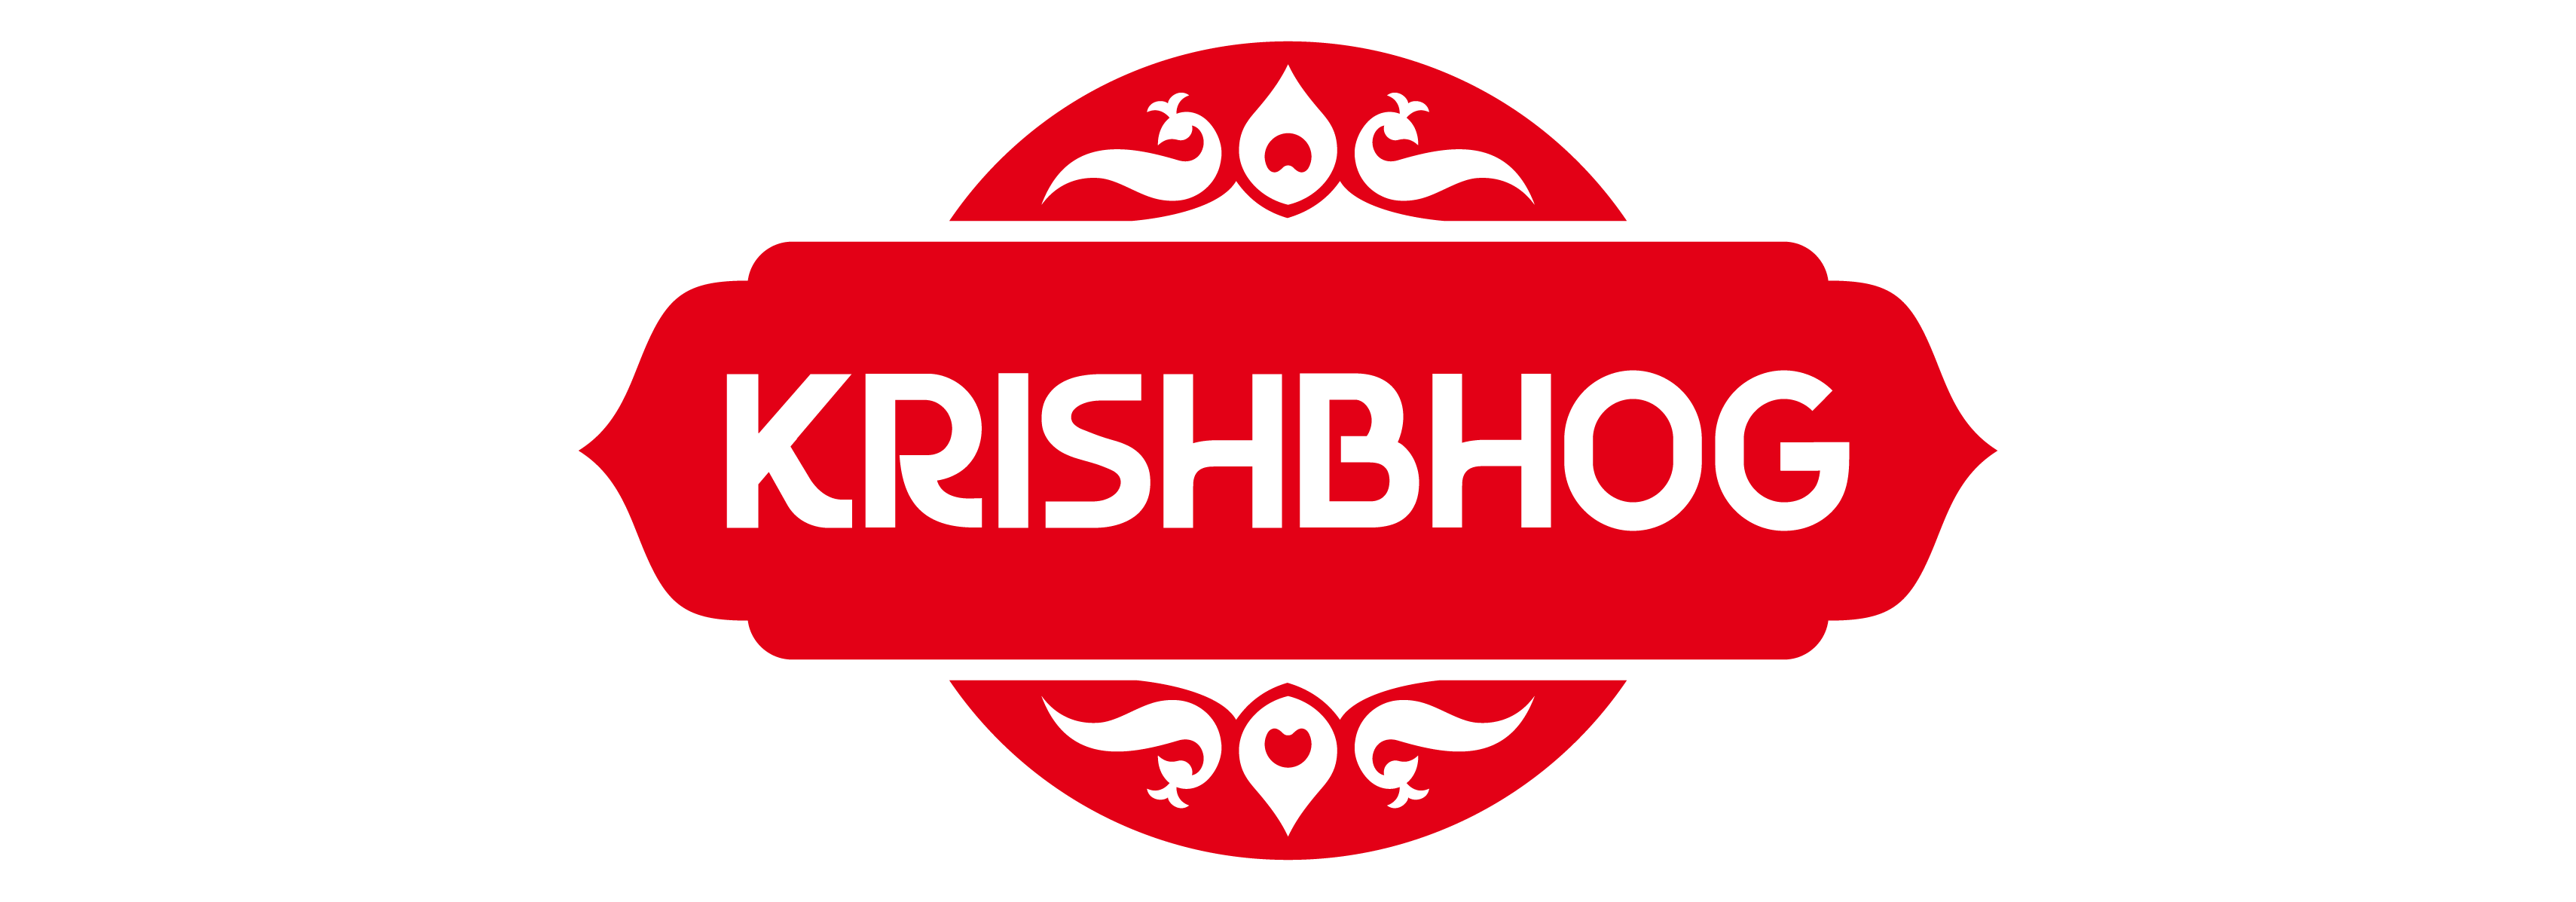 KRISHBHOG